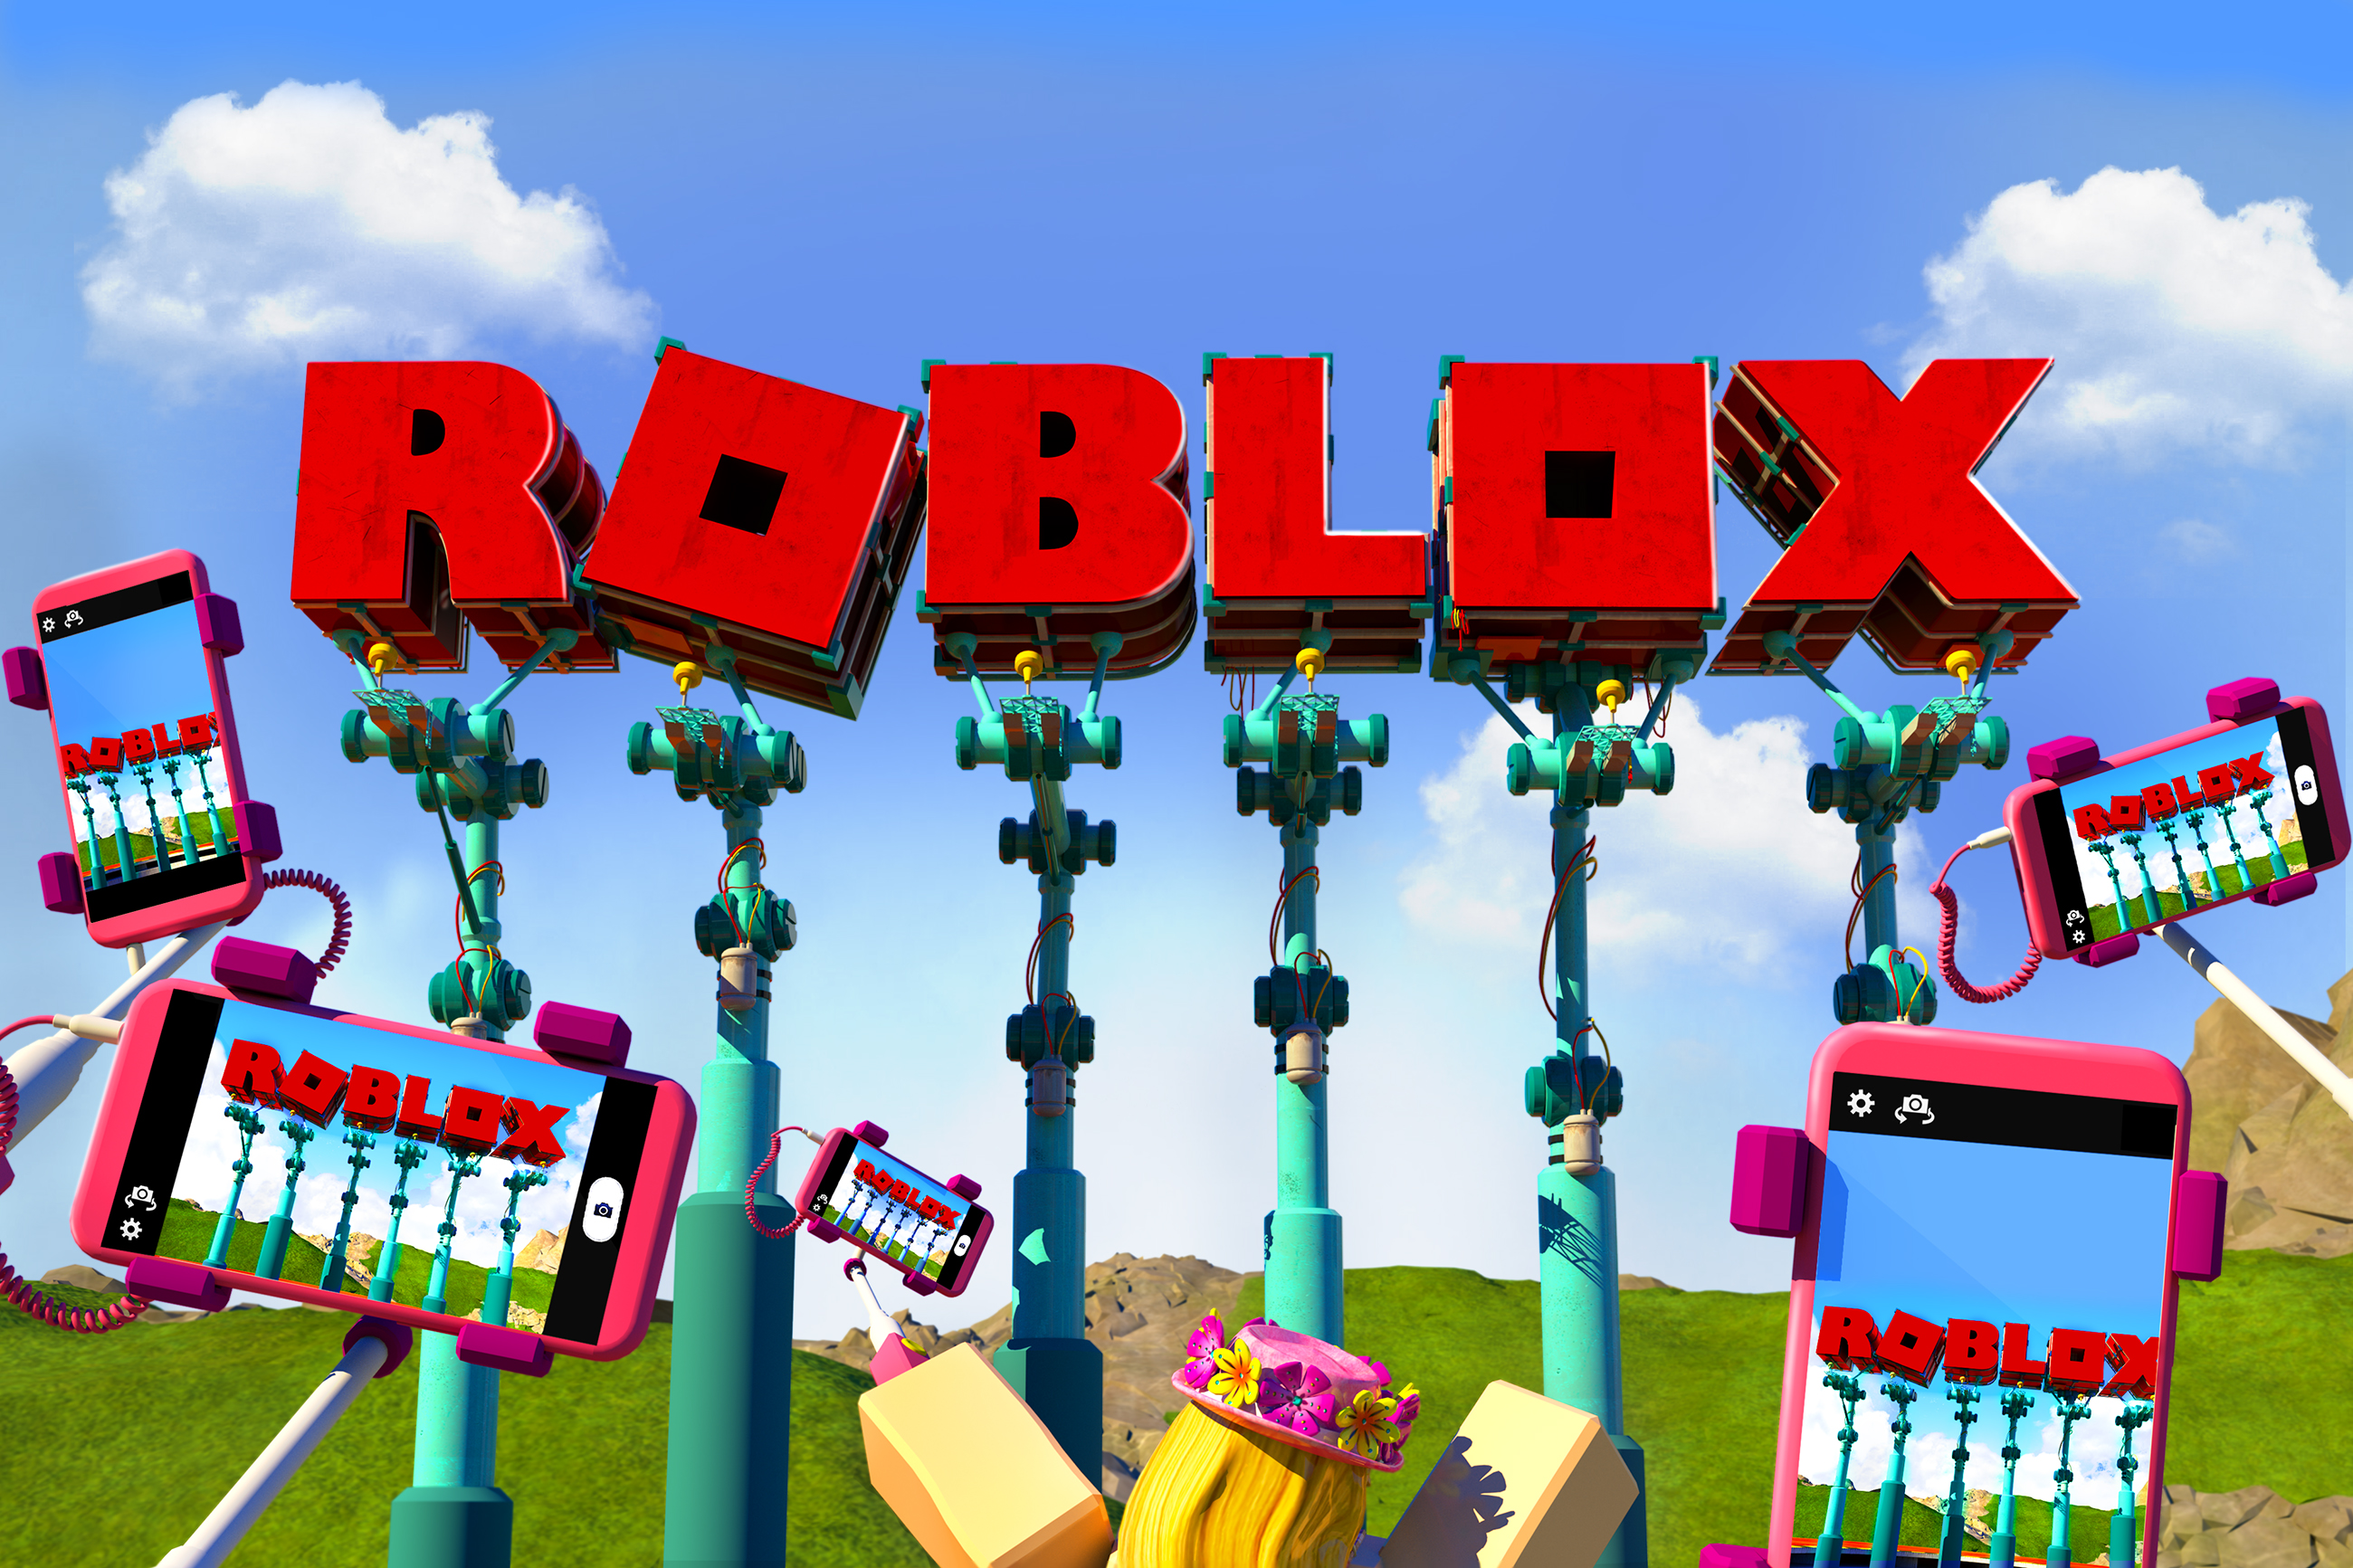 New Roblox Logos - roblox next generation logo